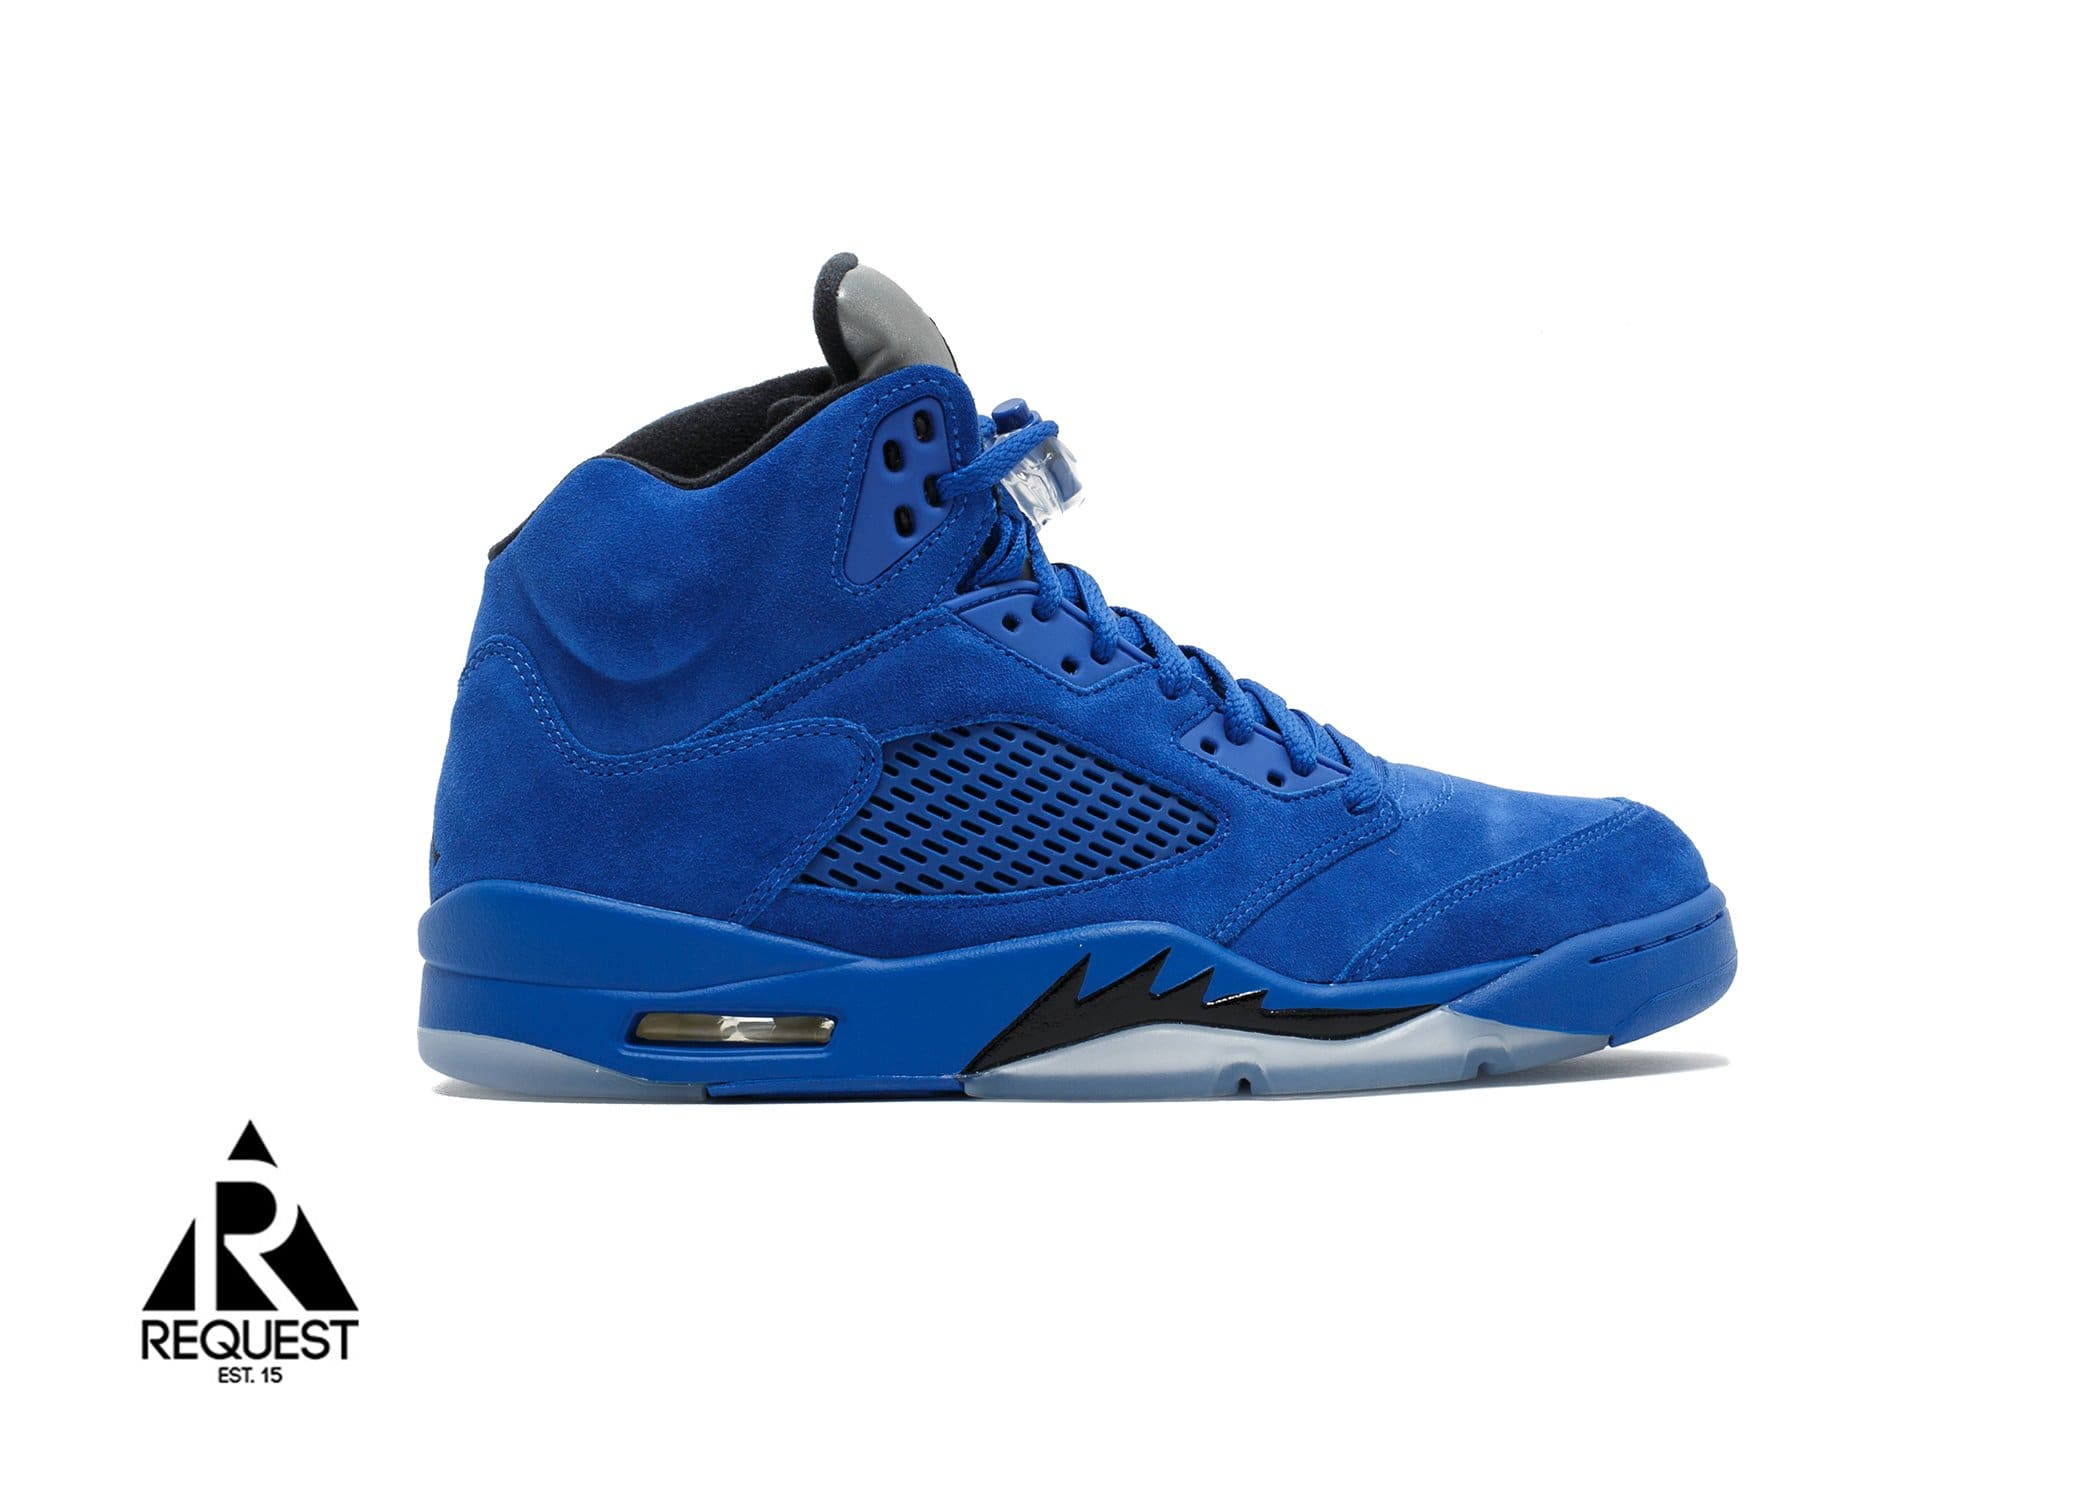 Air Jordan 5 Retro “Blue Suede”